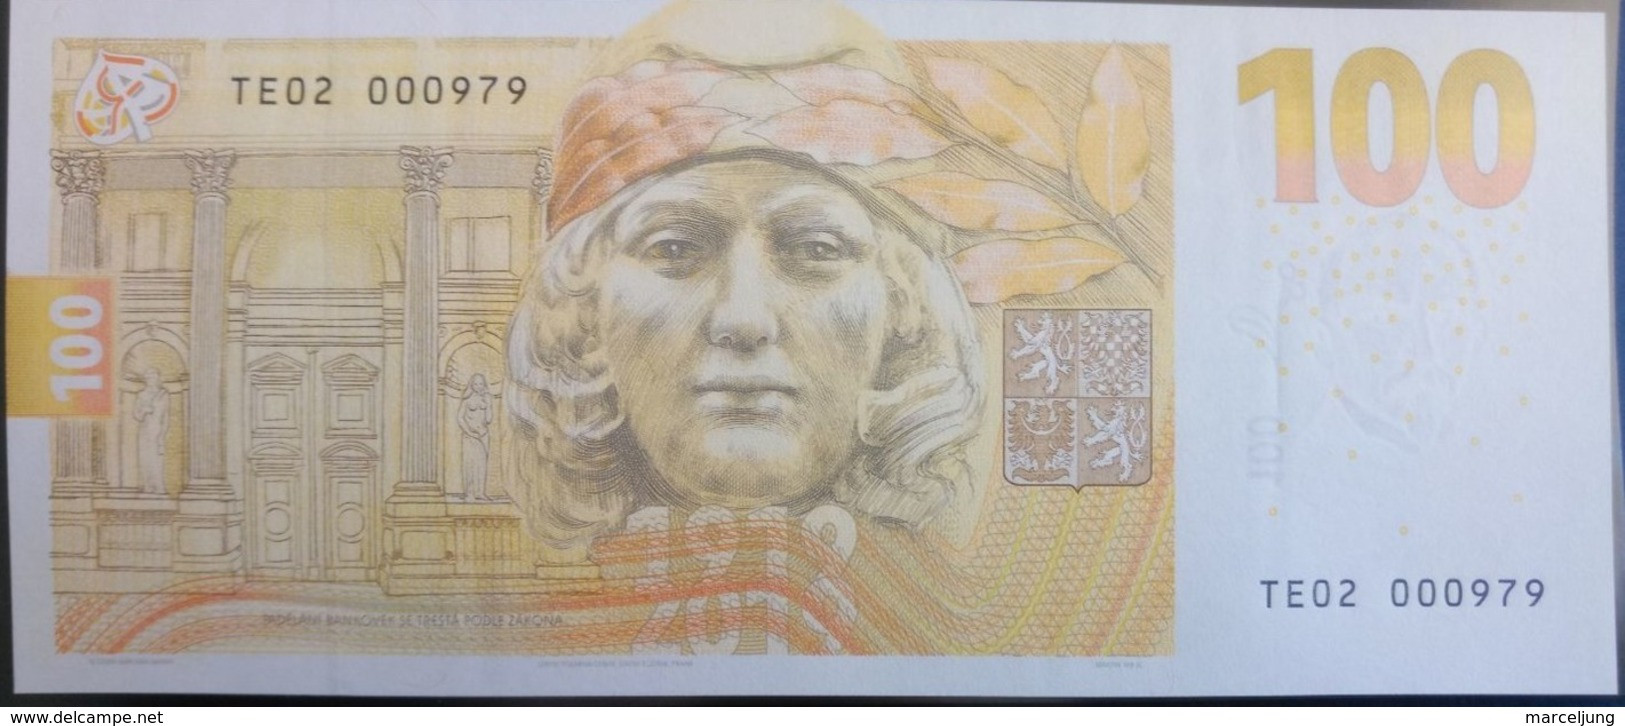 100 Korun/Kronen Czech Republic UNC 2019 Commemorative Banknote, Rare / GEDENKBANKNOTE SELTEN - Tschechien